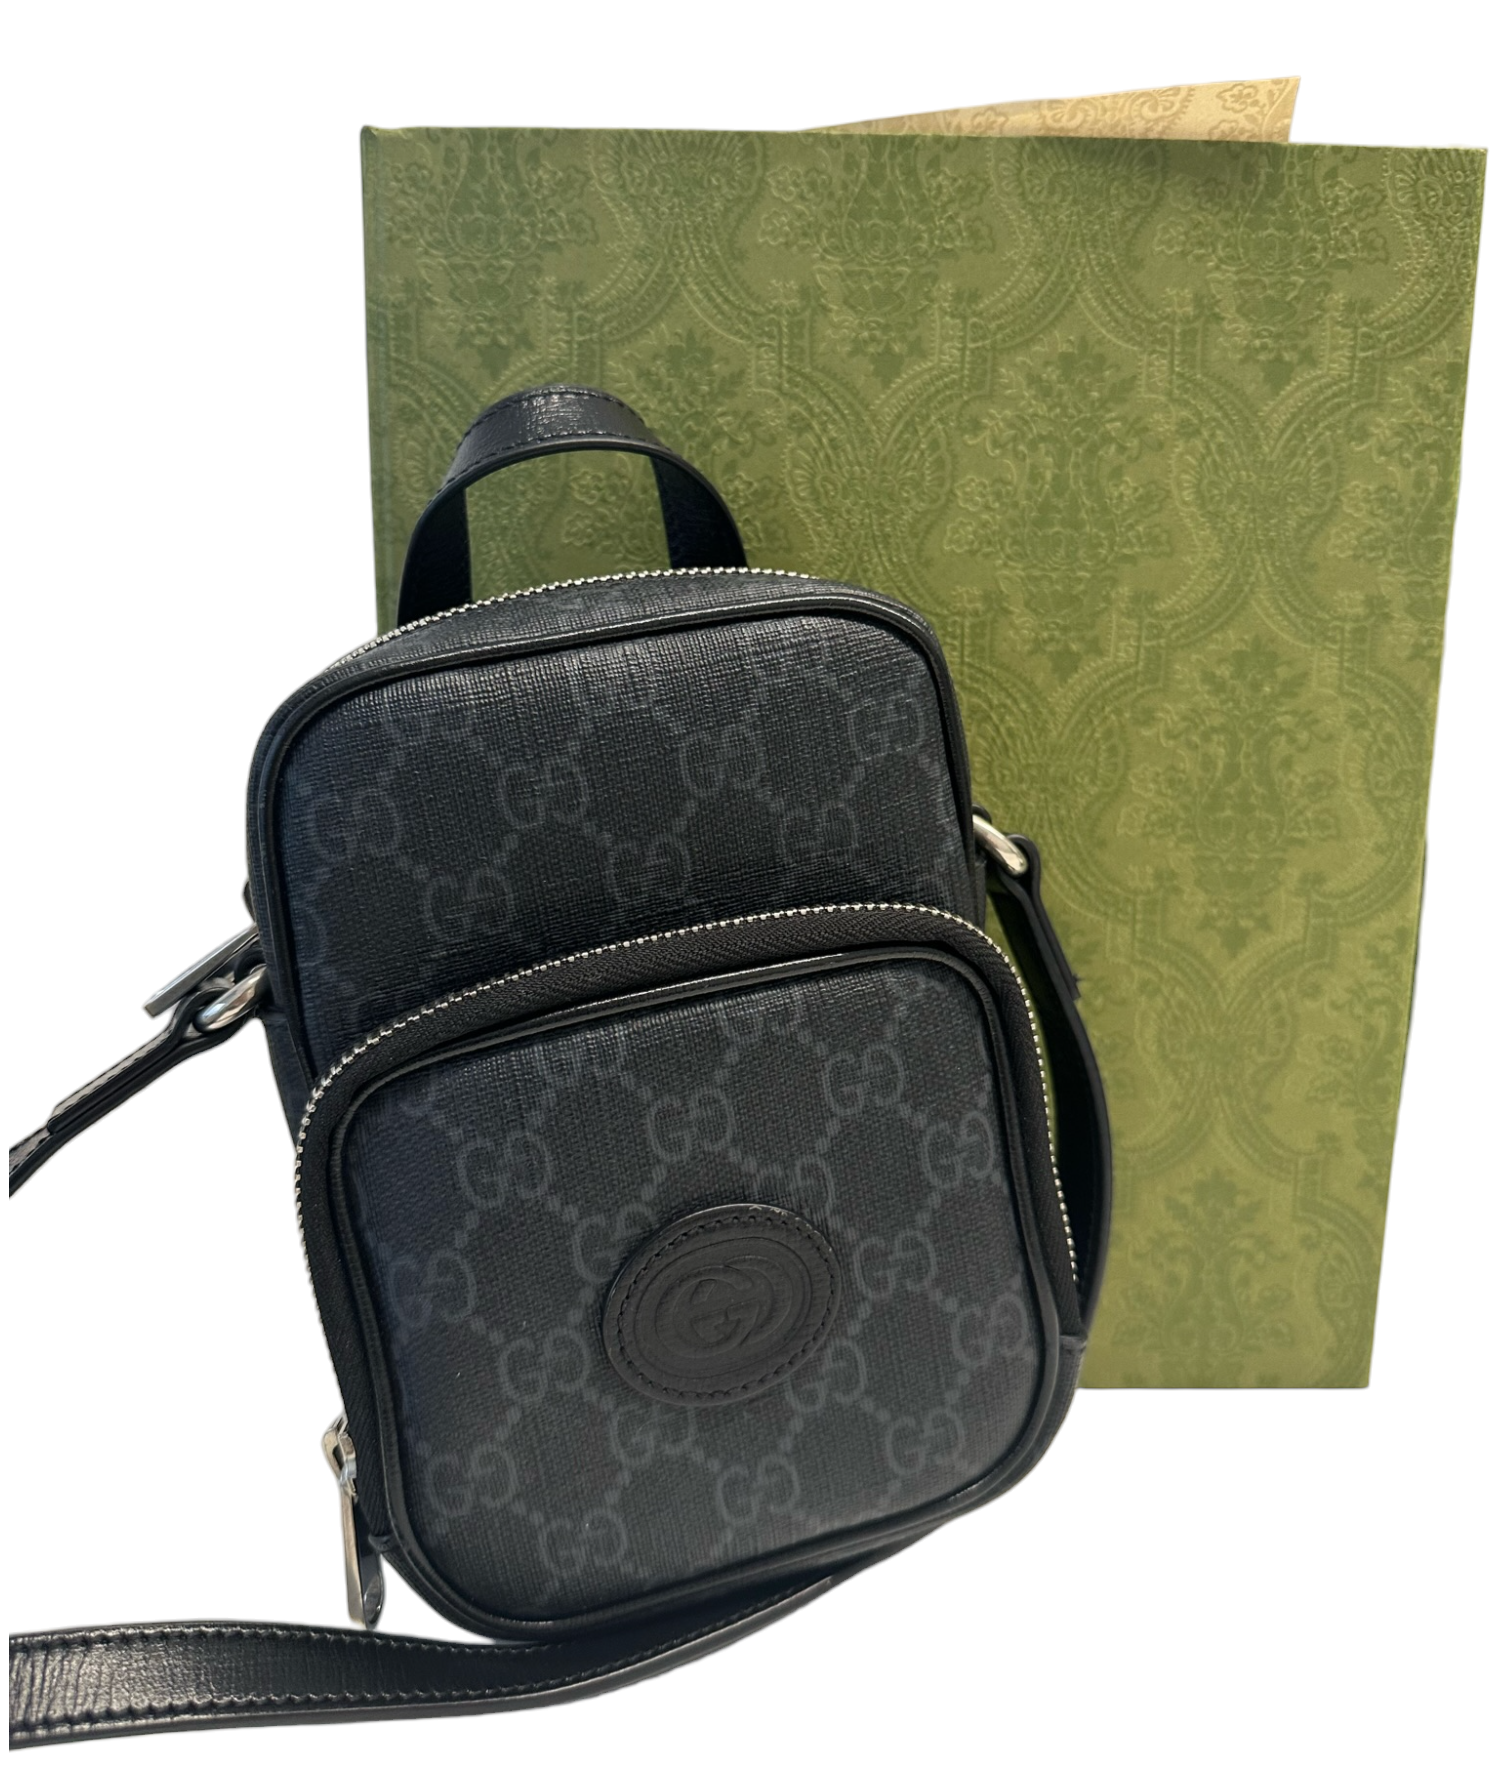 Gucci: Black Mini Interlocking G Heart Bag